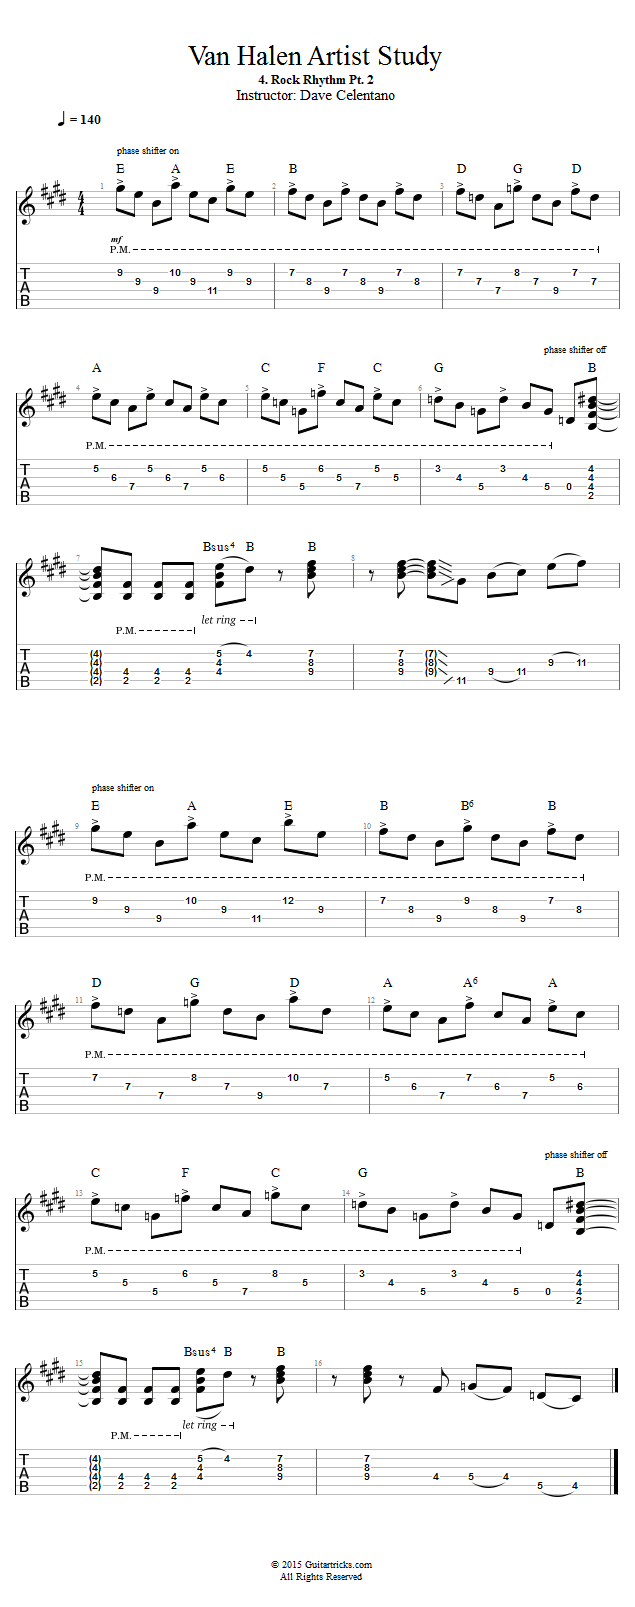 Rock Rhythm Pt. 2 song notation